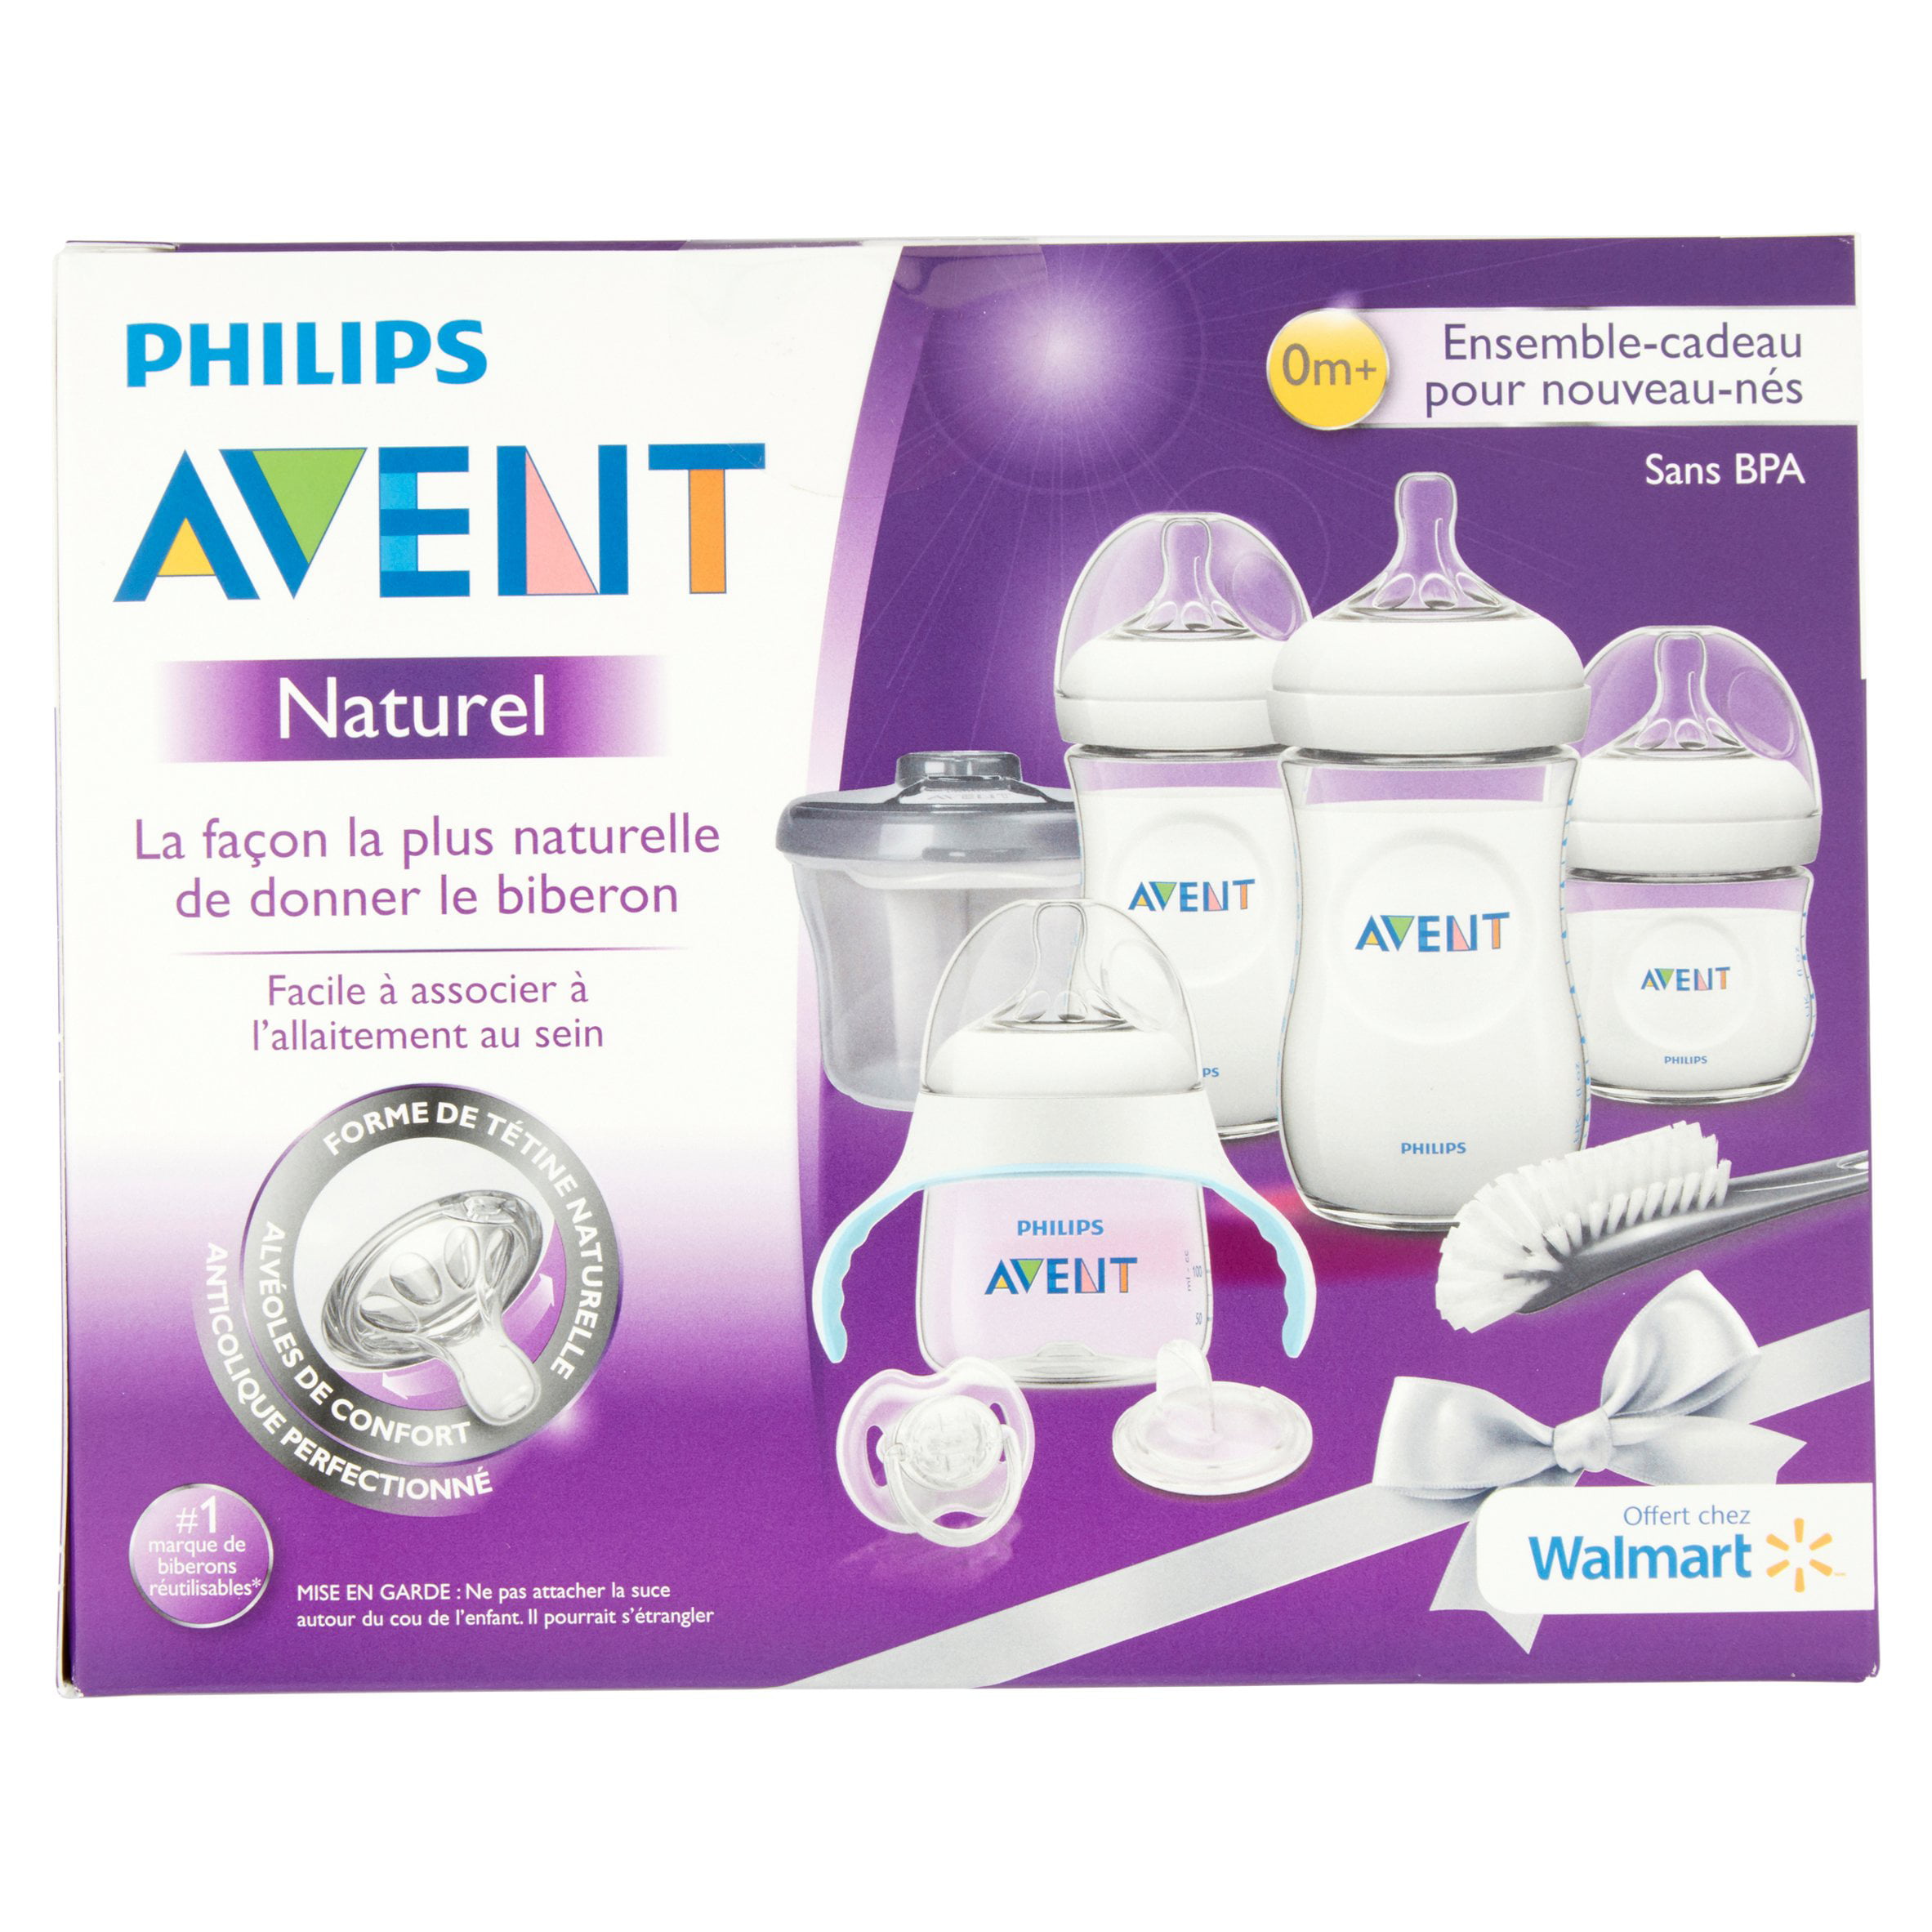 Uitreiken Kritisch limoen Philips Avent Natural 0m+ Newborn Starter Gift Set - Walmart.com